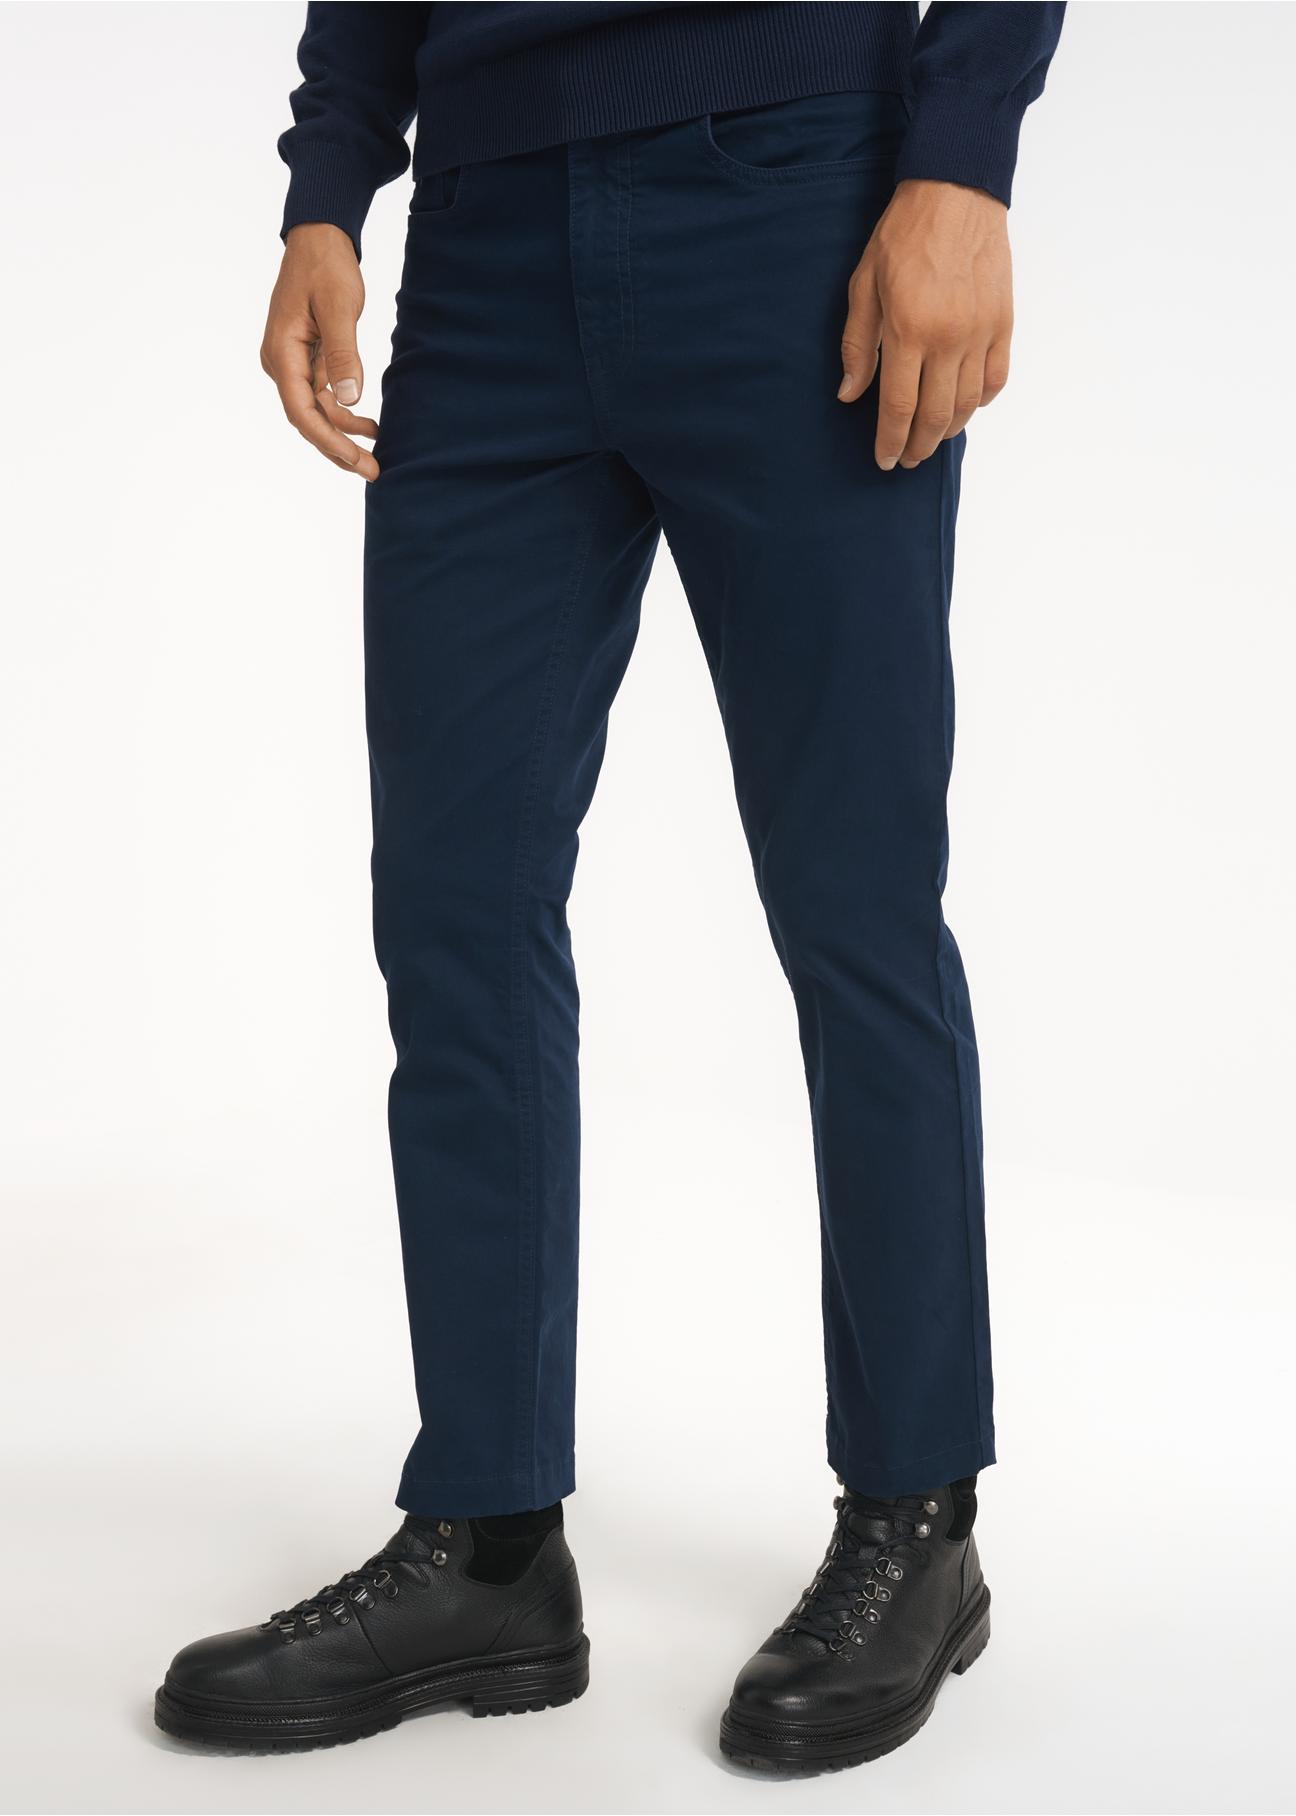 Granatowe spodnie męskie SPOMT-0083-69(Z23)